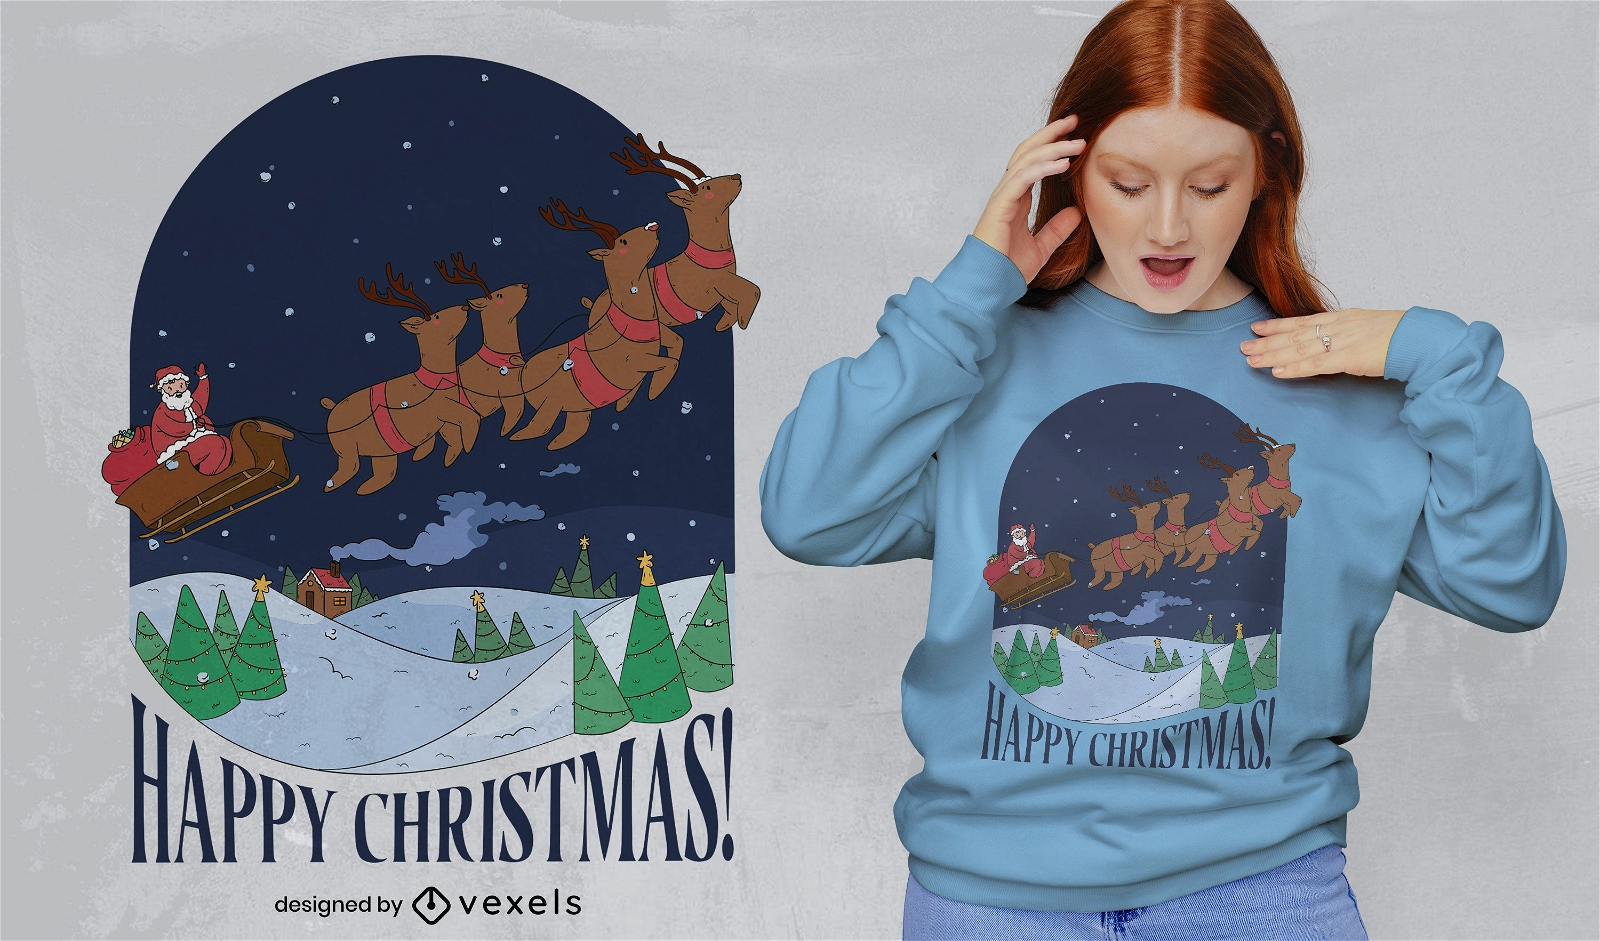 Happy Christmas t-shirt design